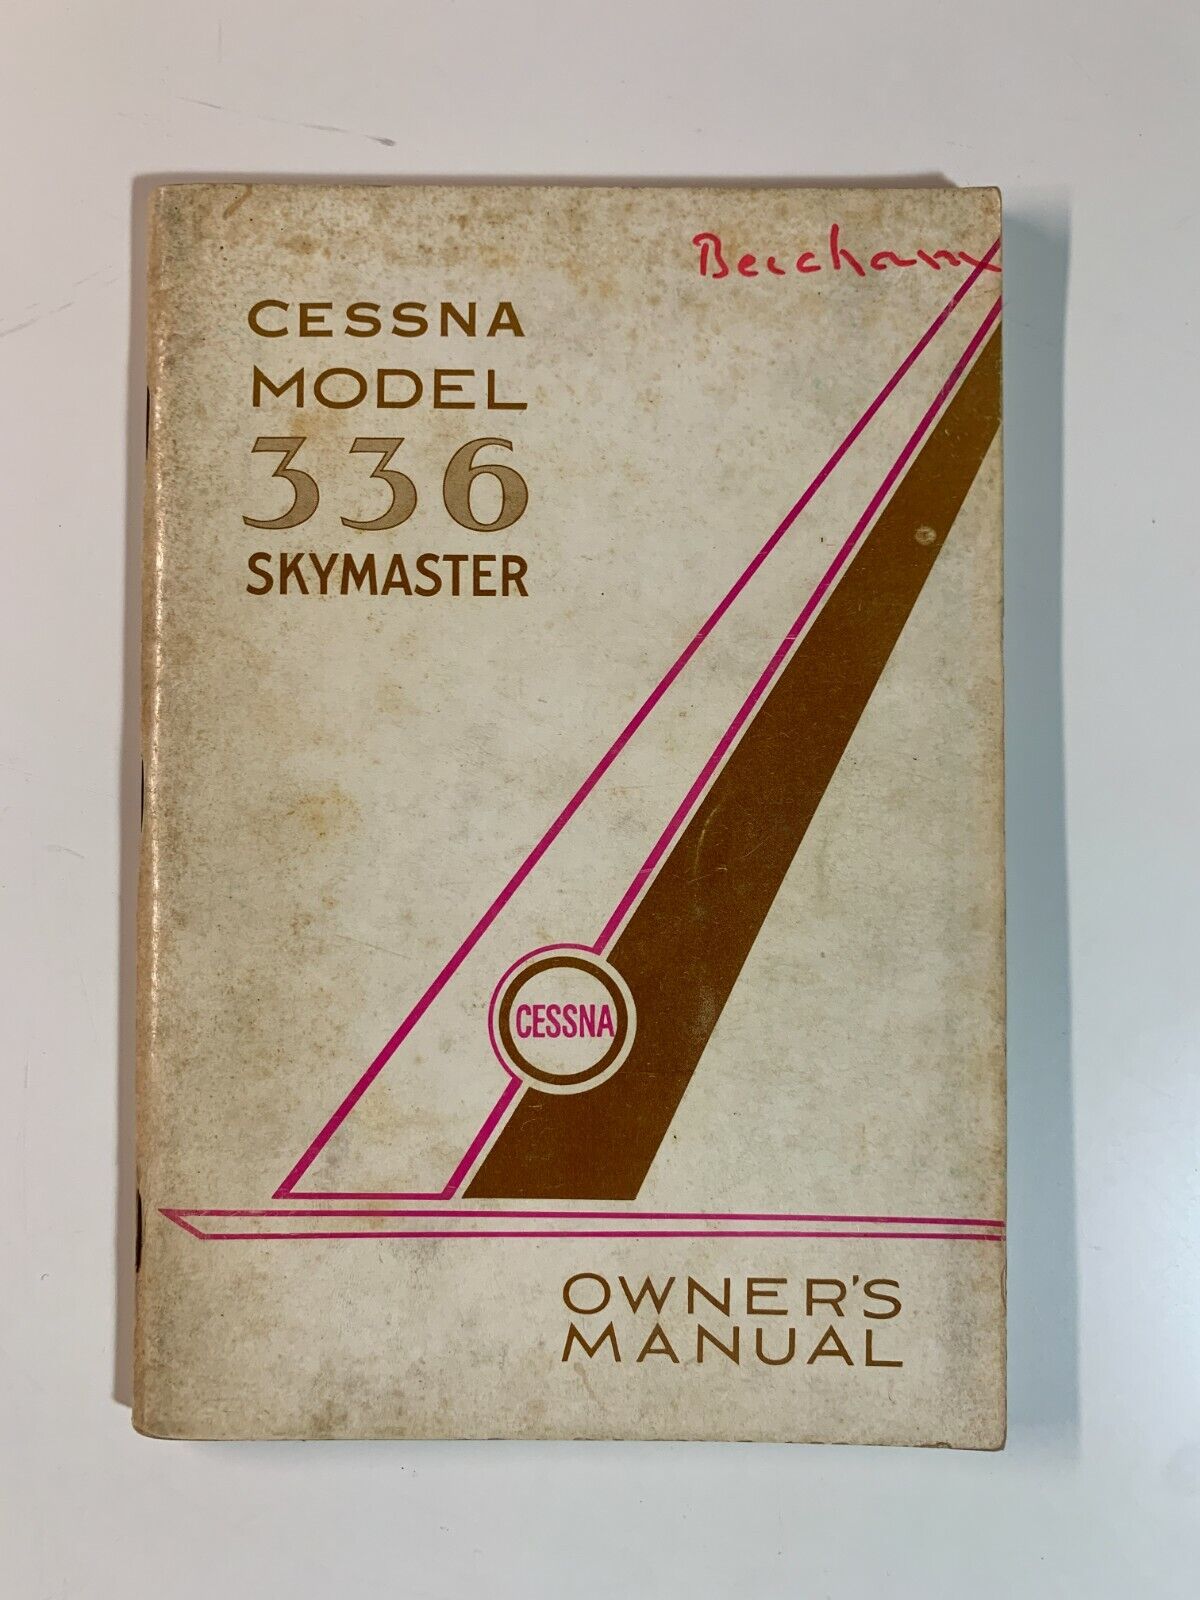 Cessna Model 336 Skymaster - Owners Manual